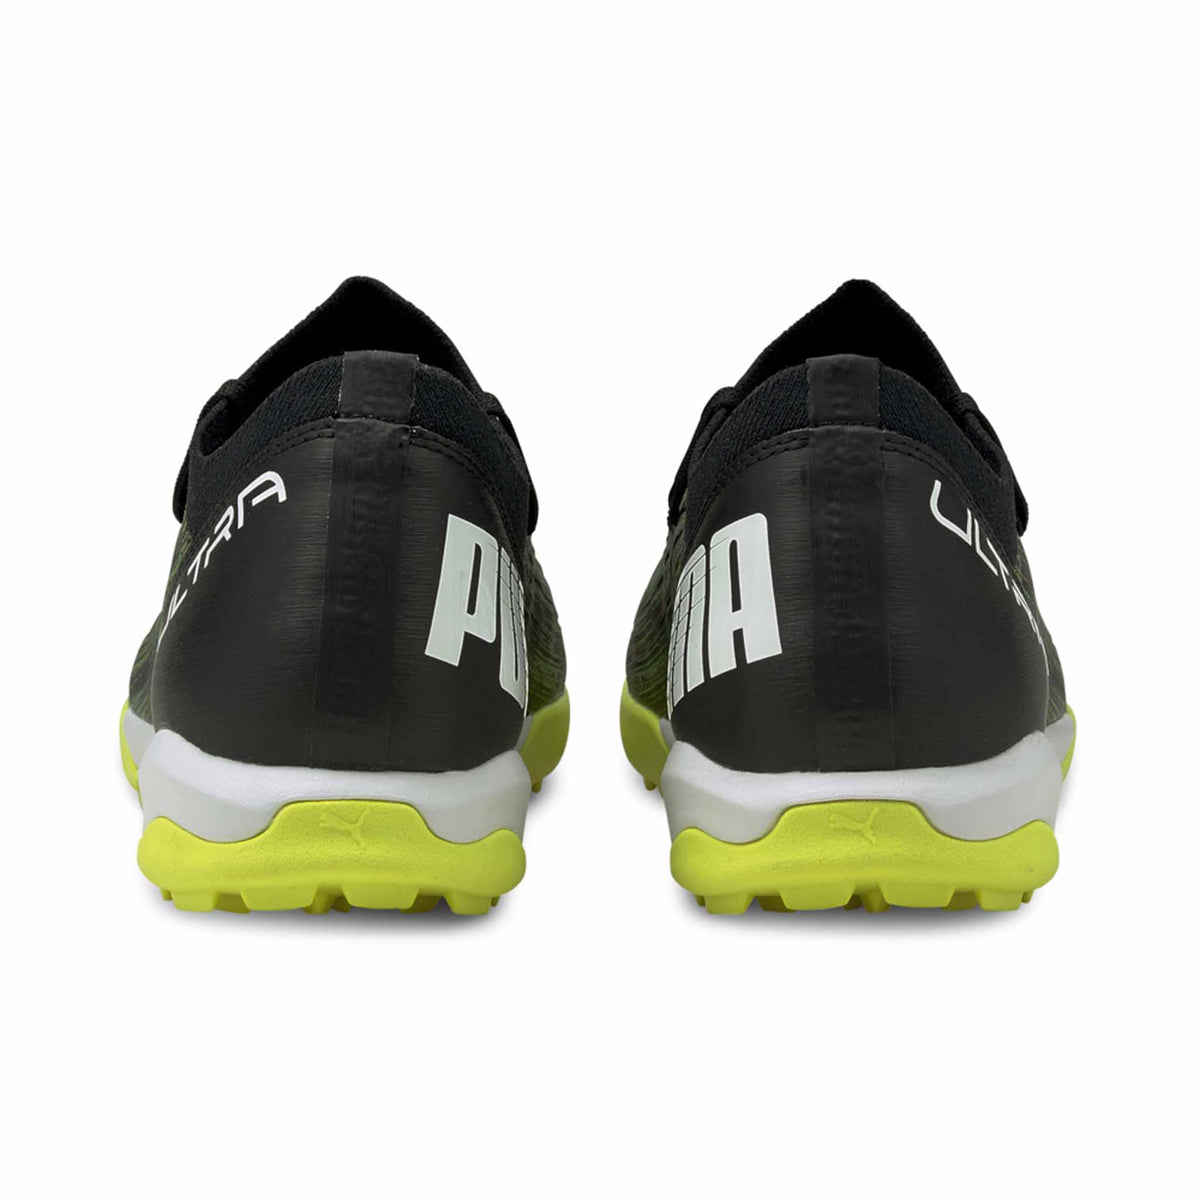 Puma Ultra 3.2 TT chaussures de soccer turf - Puma Black / Puma White / Yellow Alert - talon